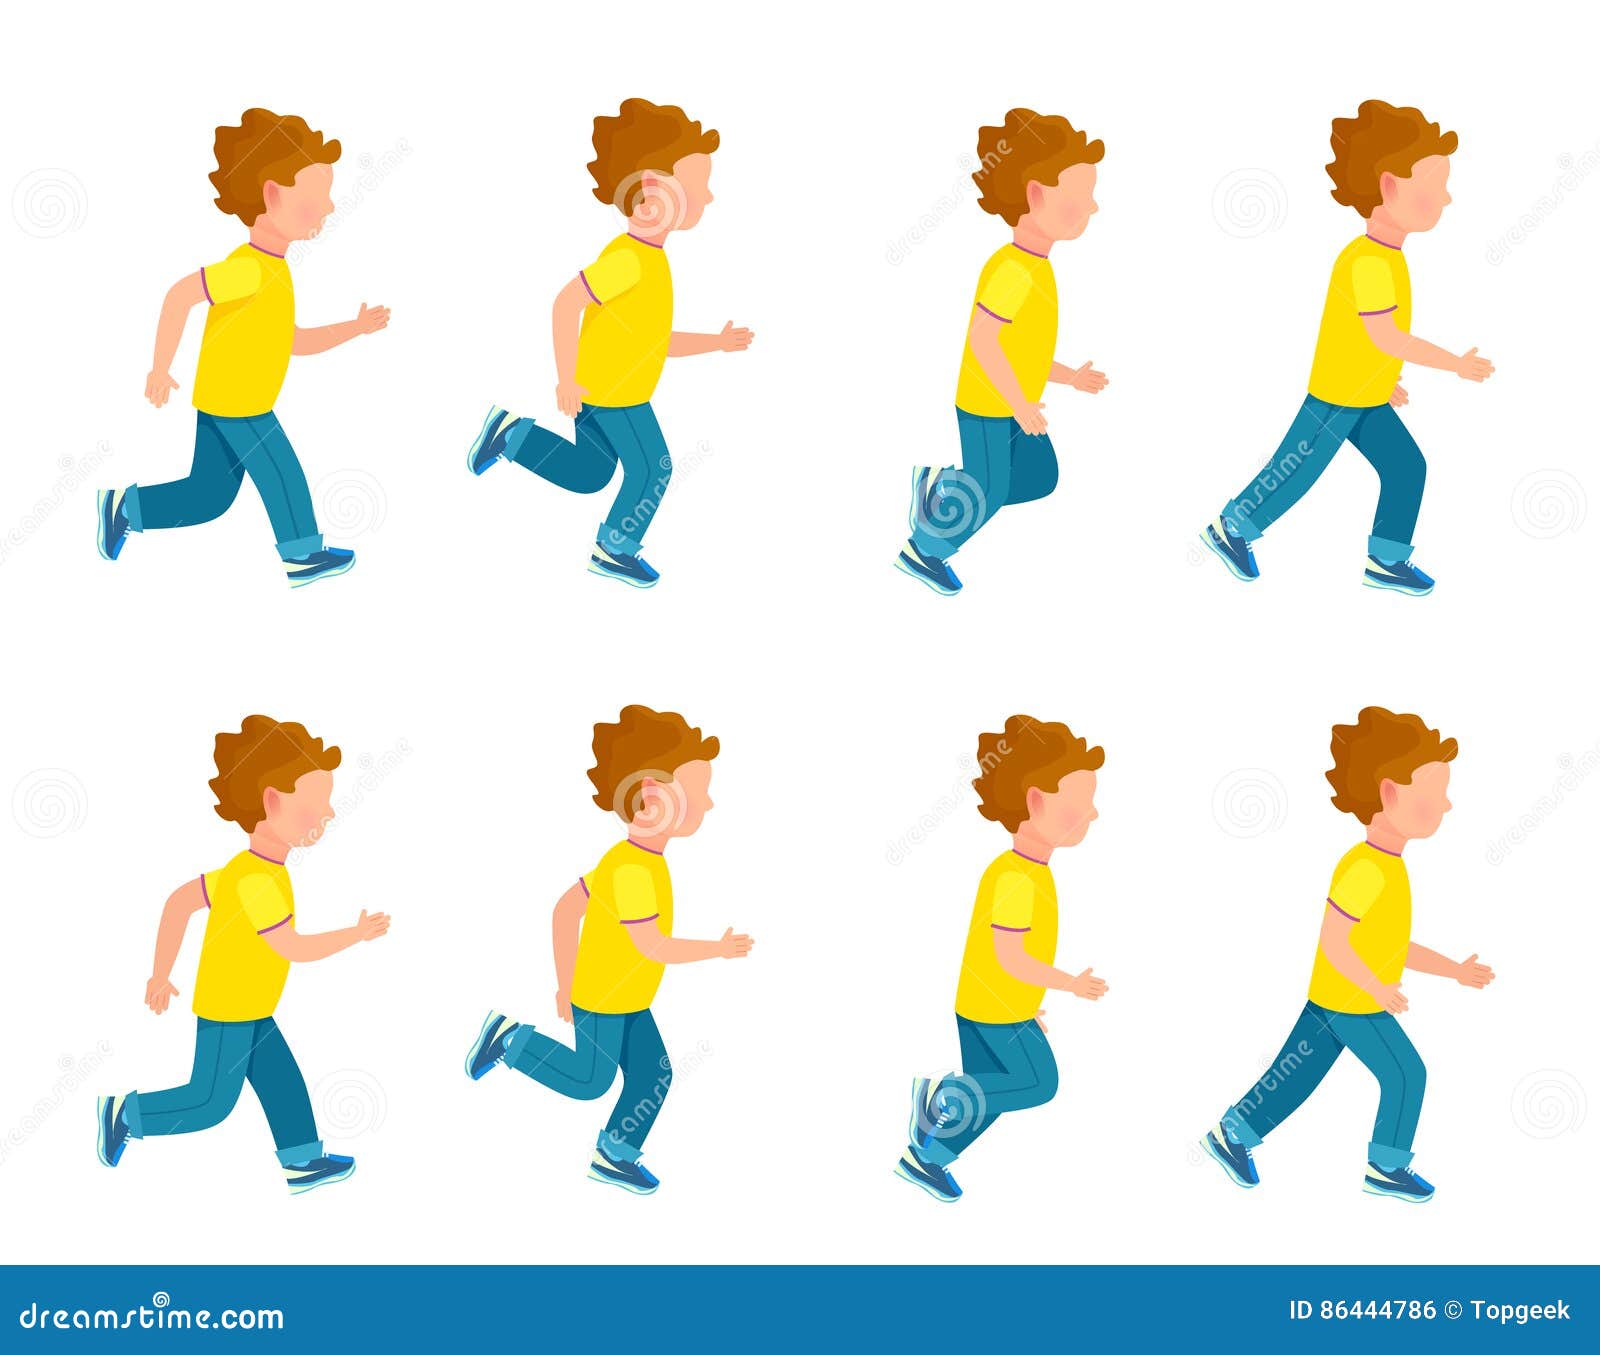 Running Boy Animation Sprite Set. 8 Frame Loop. Stock Vector - Illustration  of human, element: 86444786